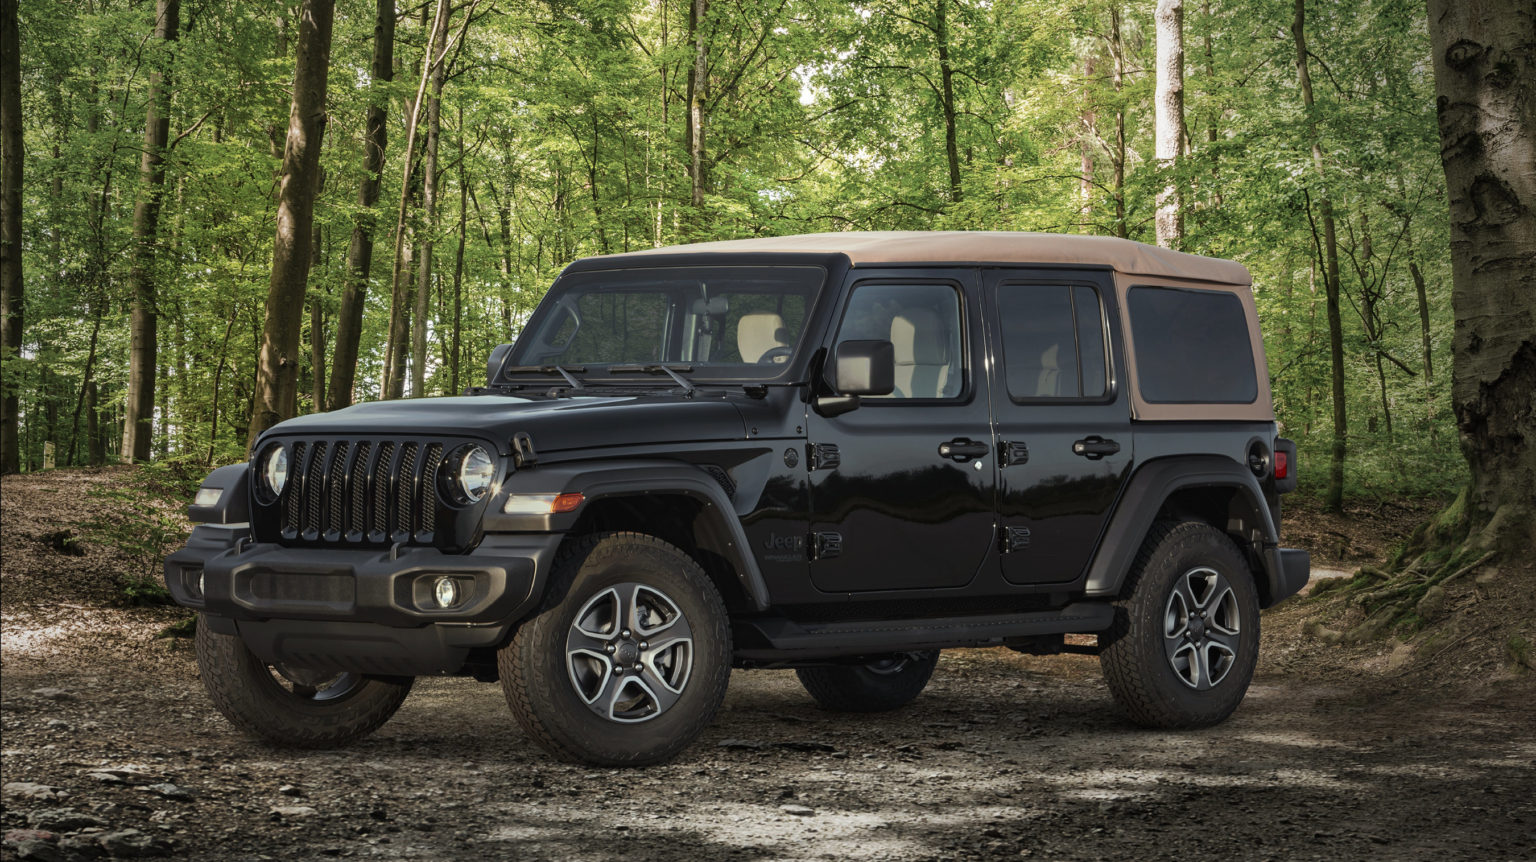 The 2020 Jeep Wrangler Black & Tan gives buyers a bit of heritage flair alongside modern tech.